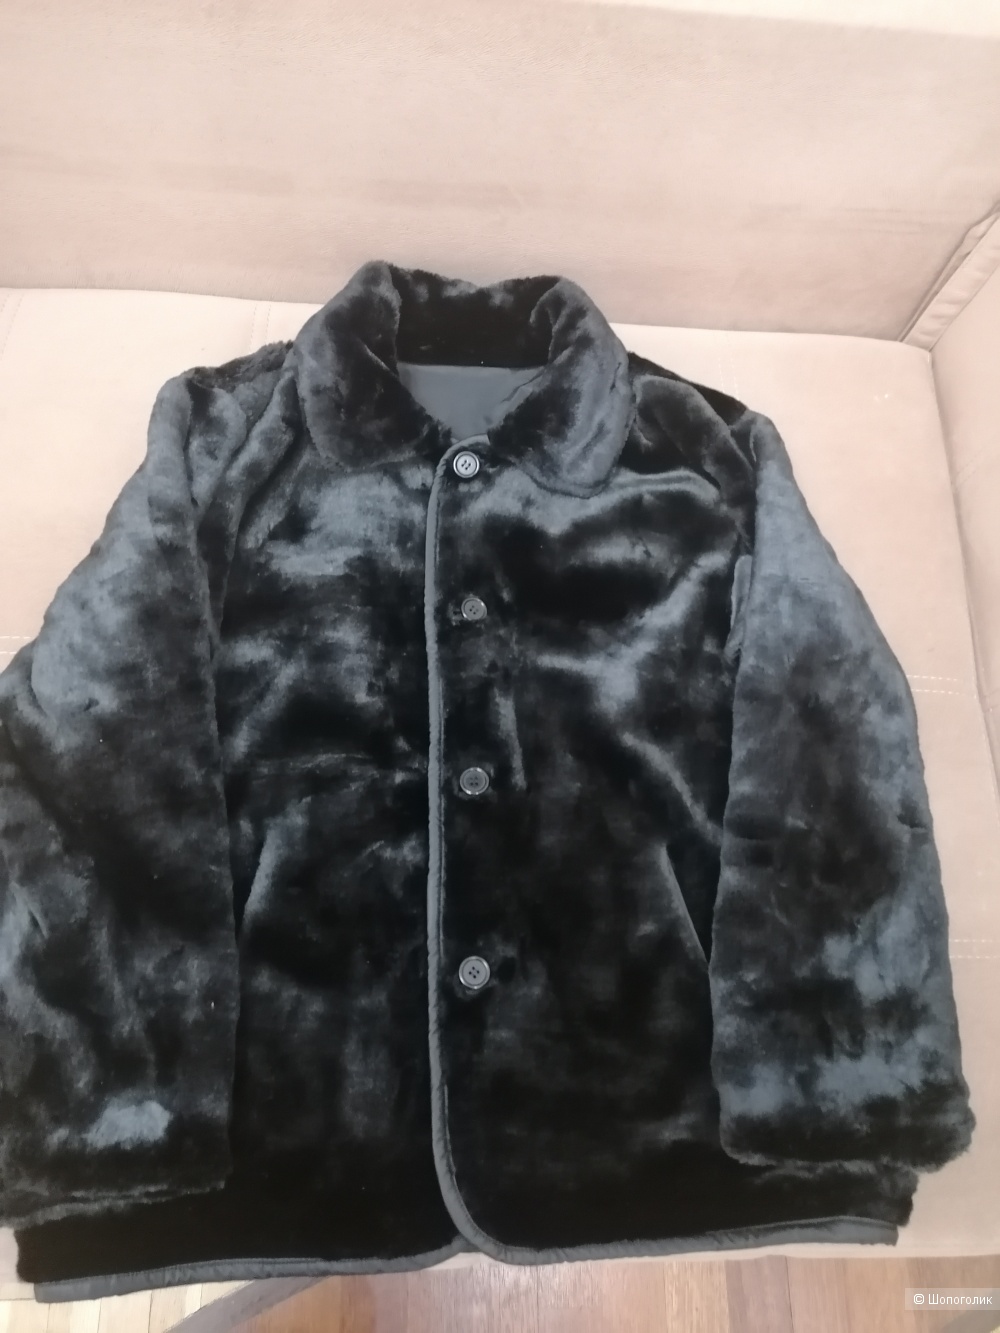 Двусторонняя куртка-полушубок Outbrook размер M